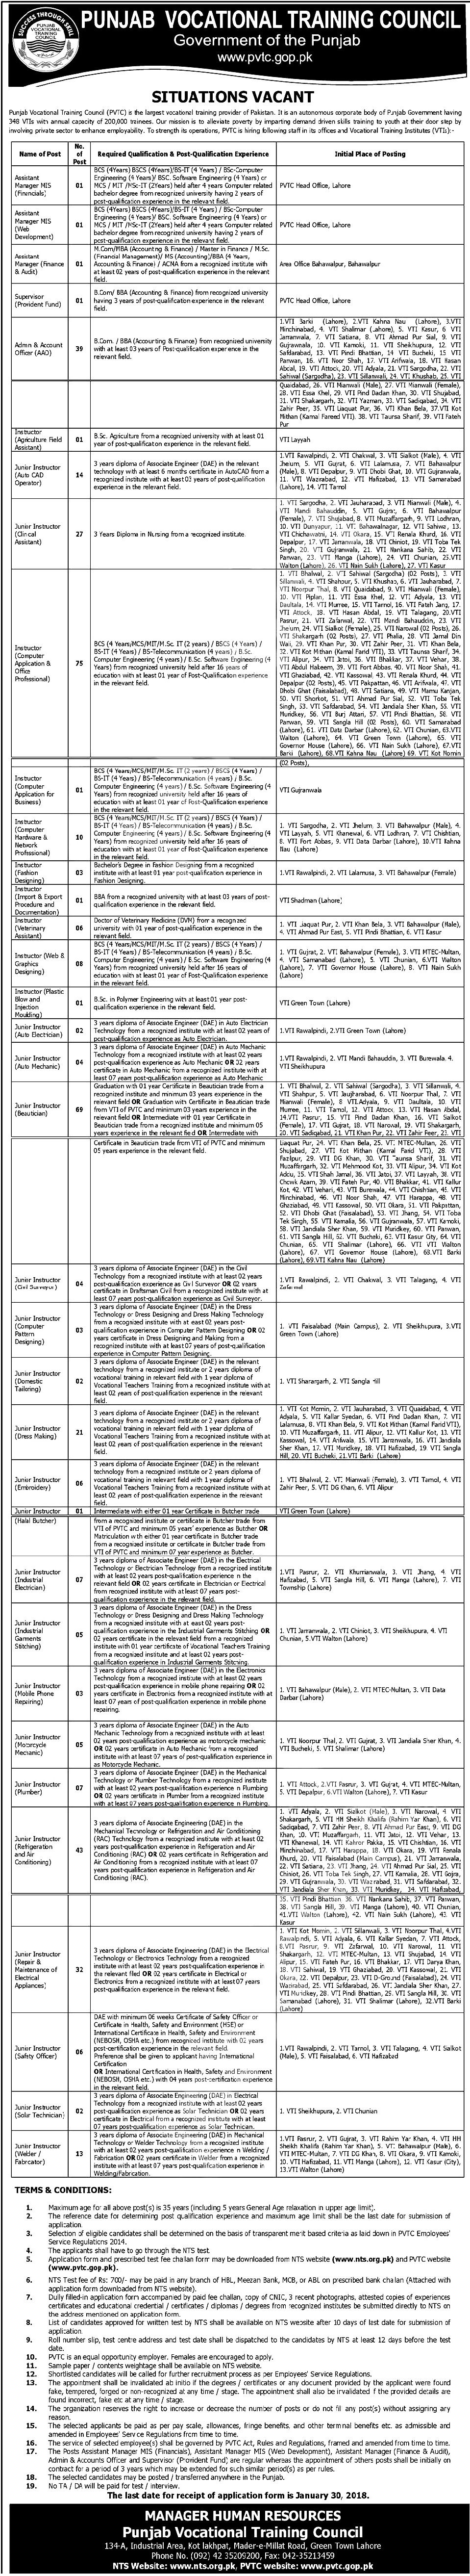 Punjab Vocational Training Council NTS Jobs Application Forms